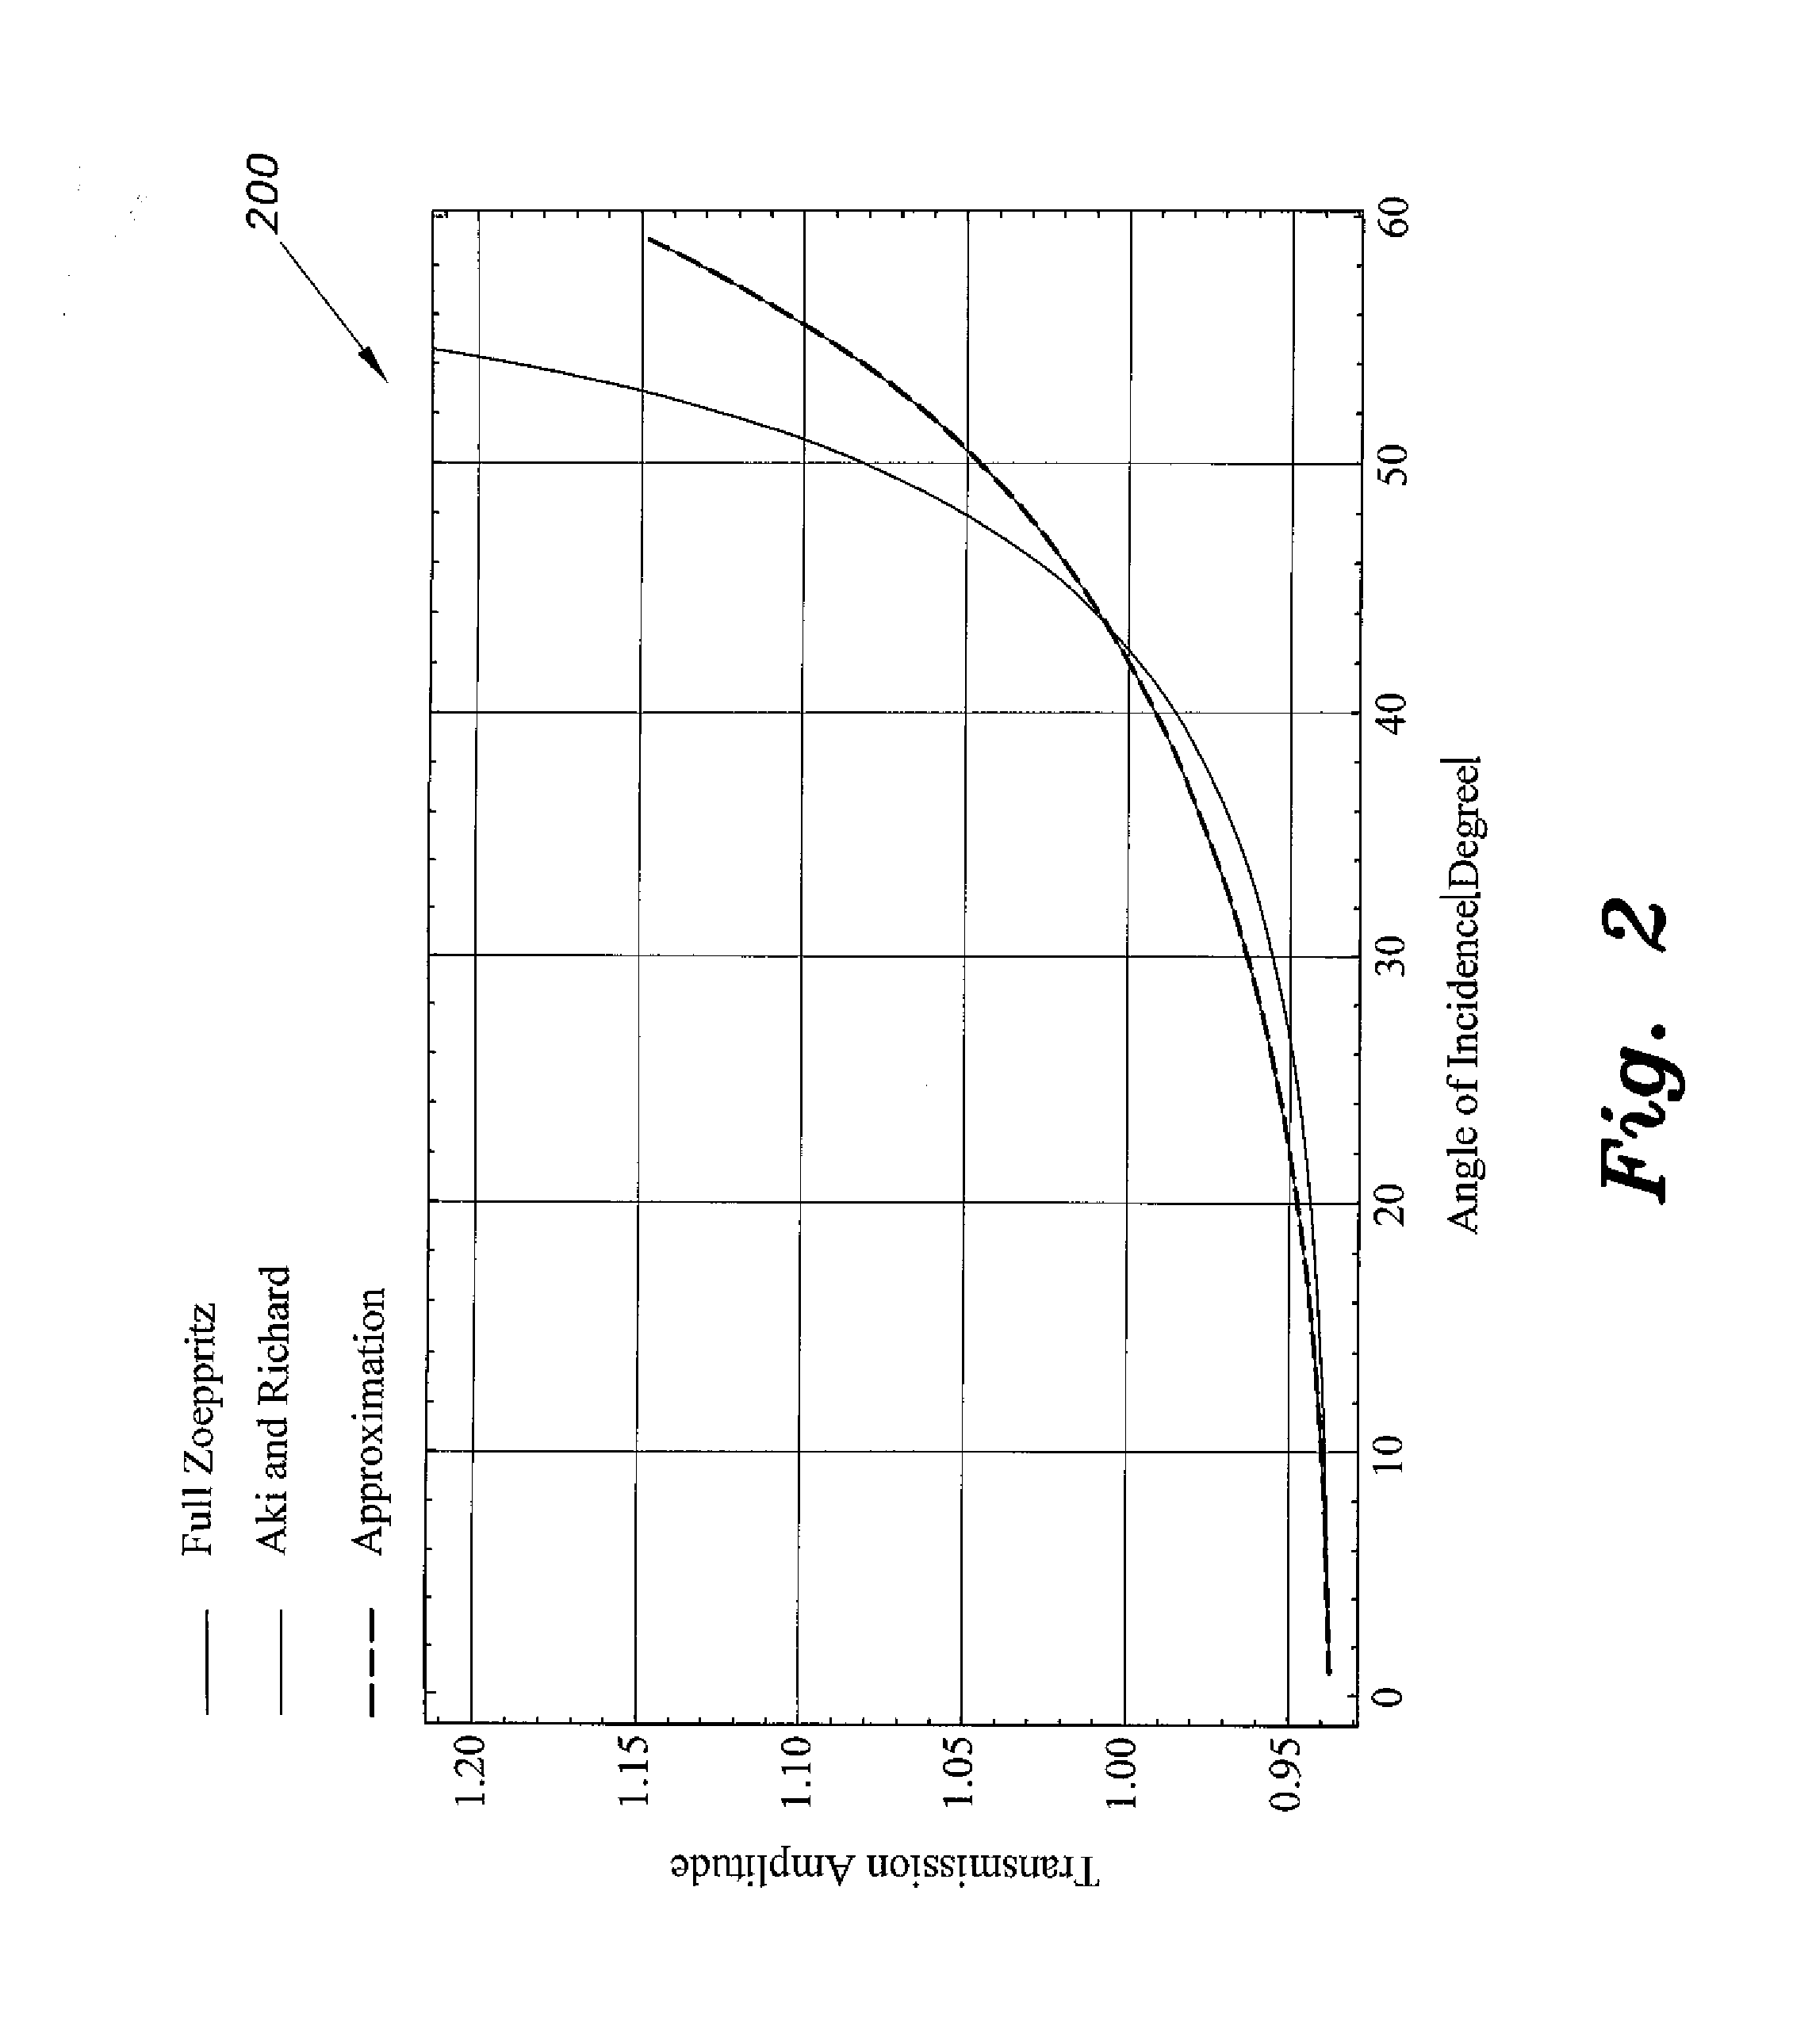 Transmission coefficient method for AVO seismic analysis